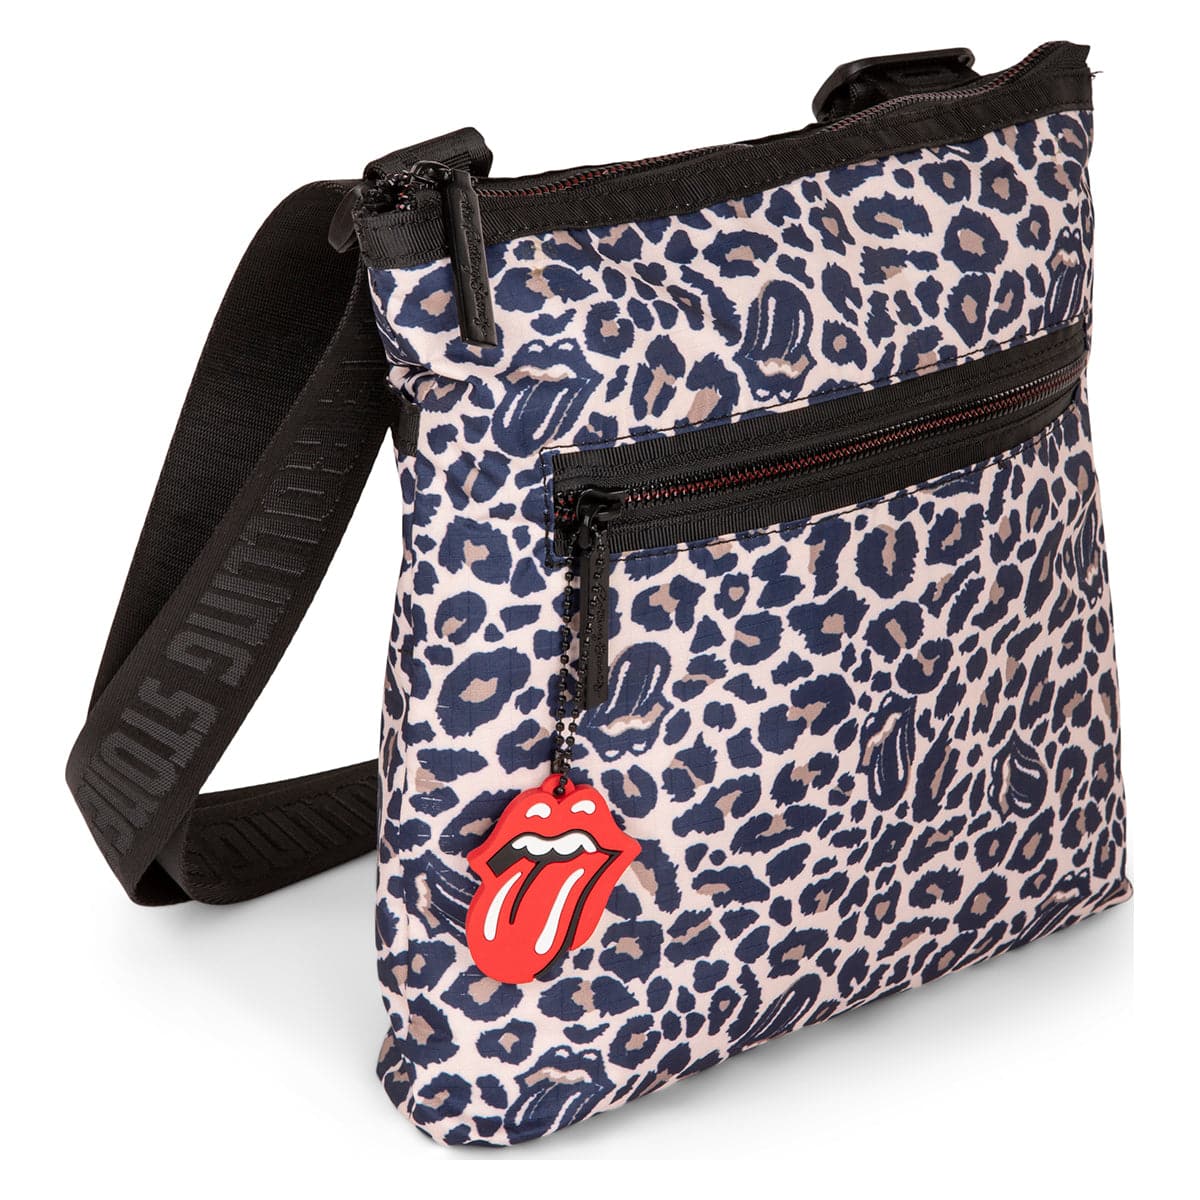 The Rolling Stones Evolution Crossbody Bag